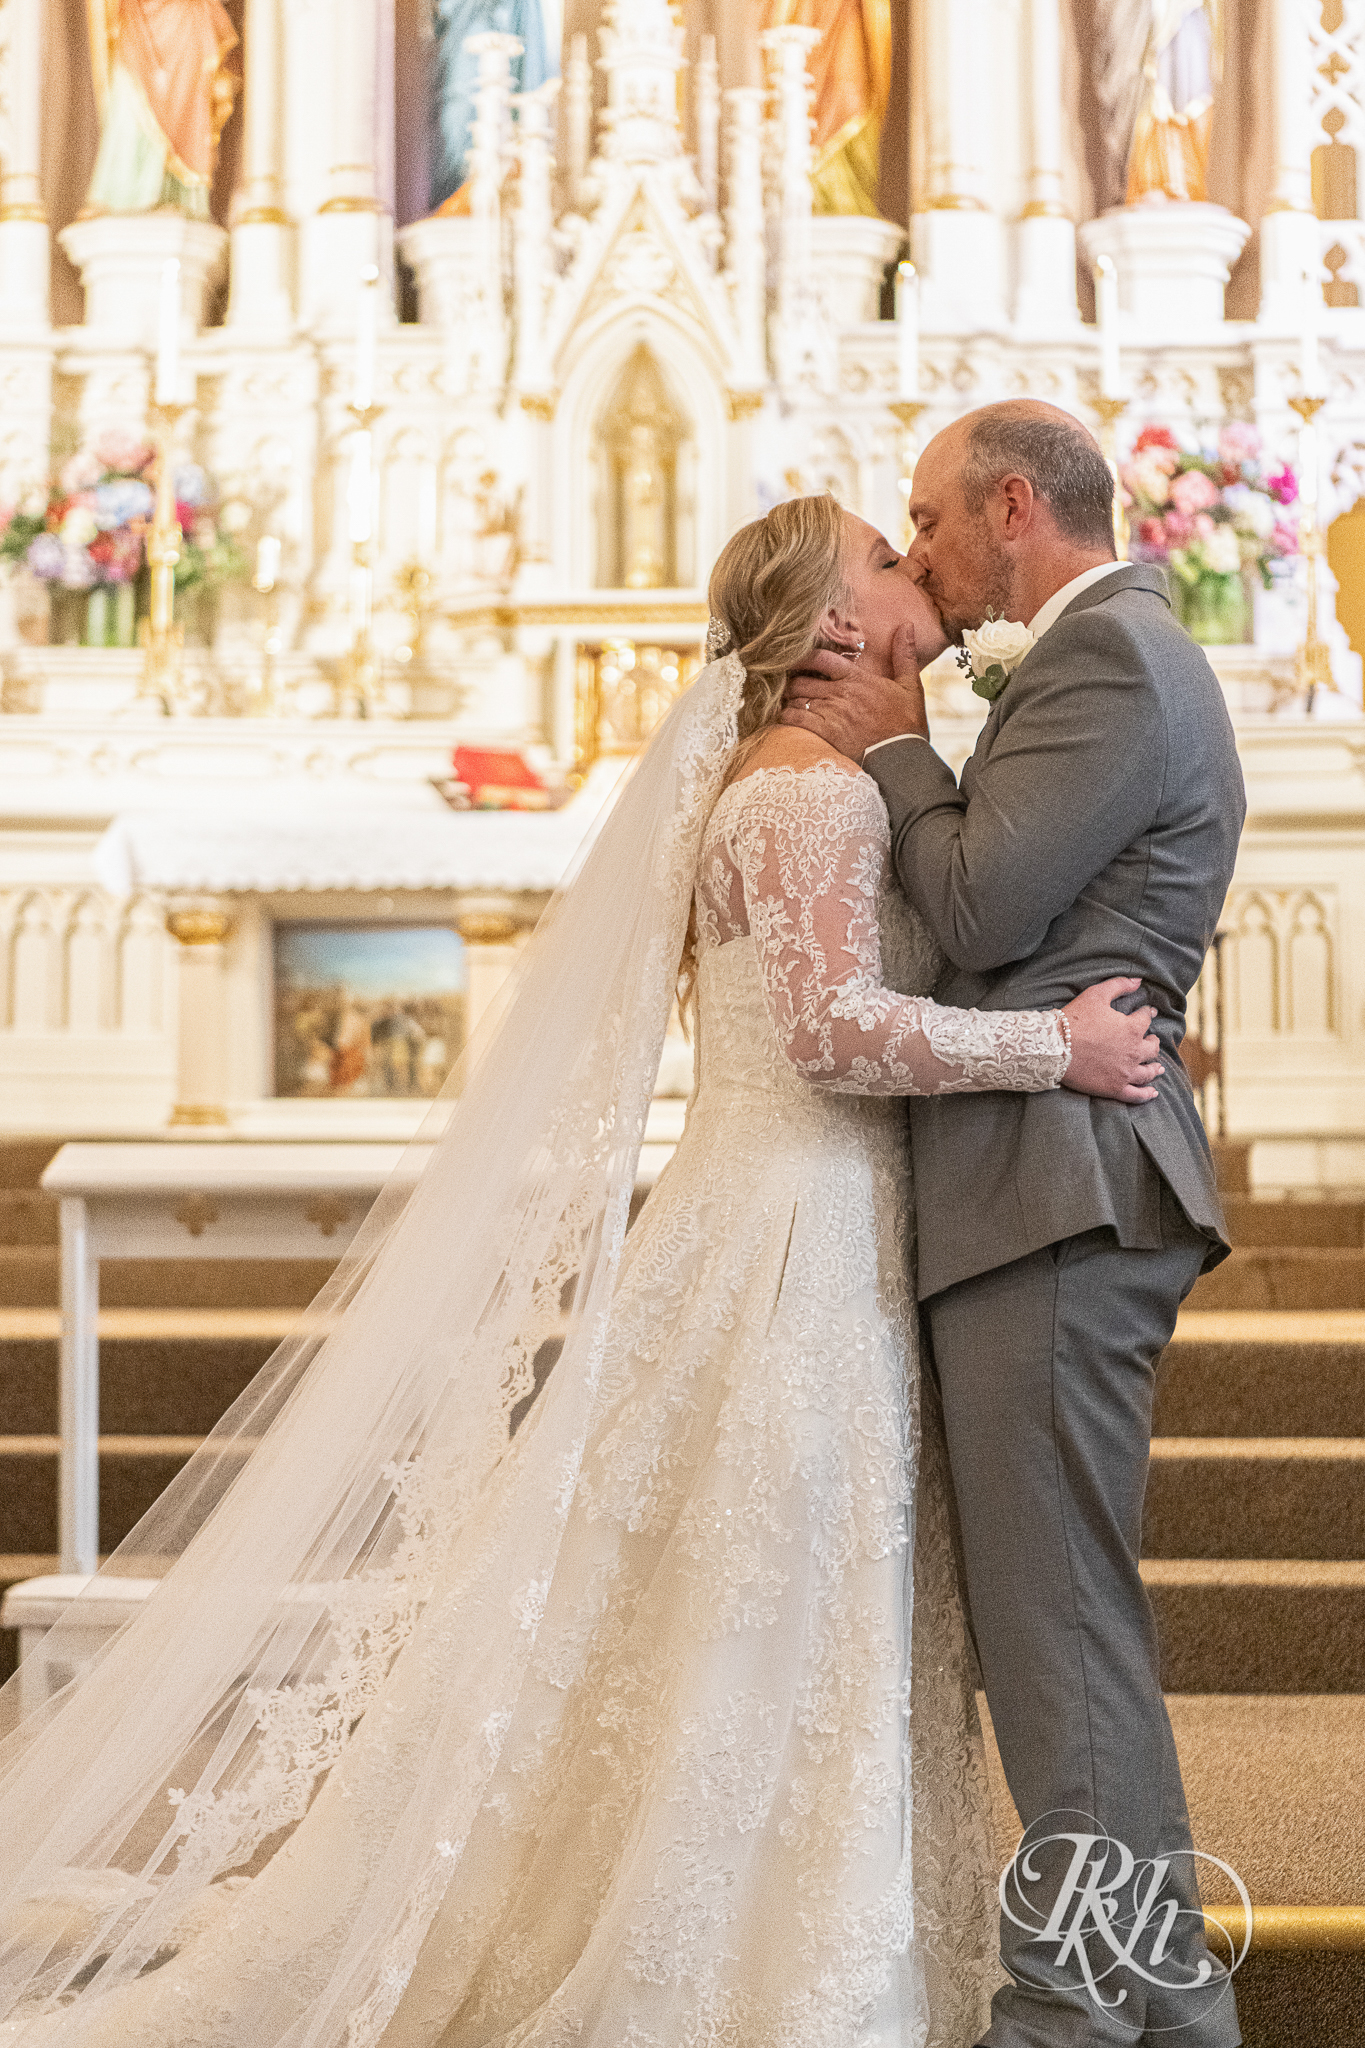 Bride and groom kiss at church wedding in New Prague, Minnesota.